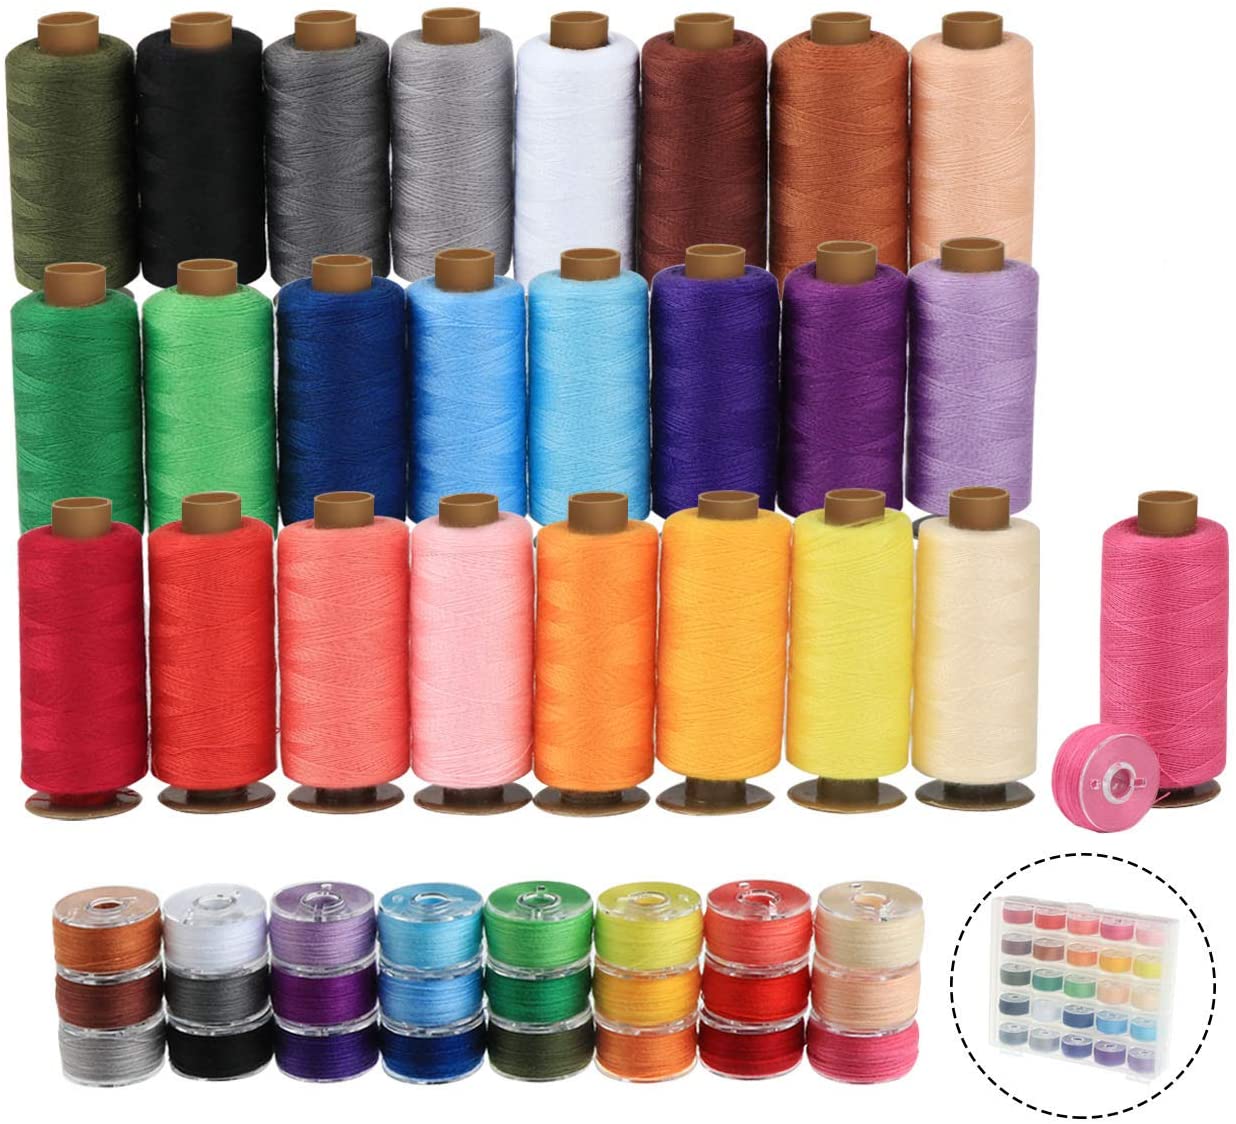 ilauke 50-Piece Bobbins Sewing Threads Kit